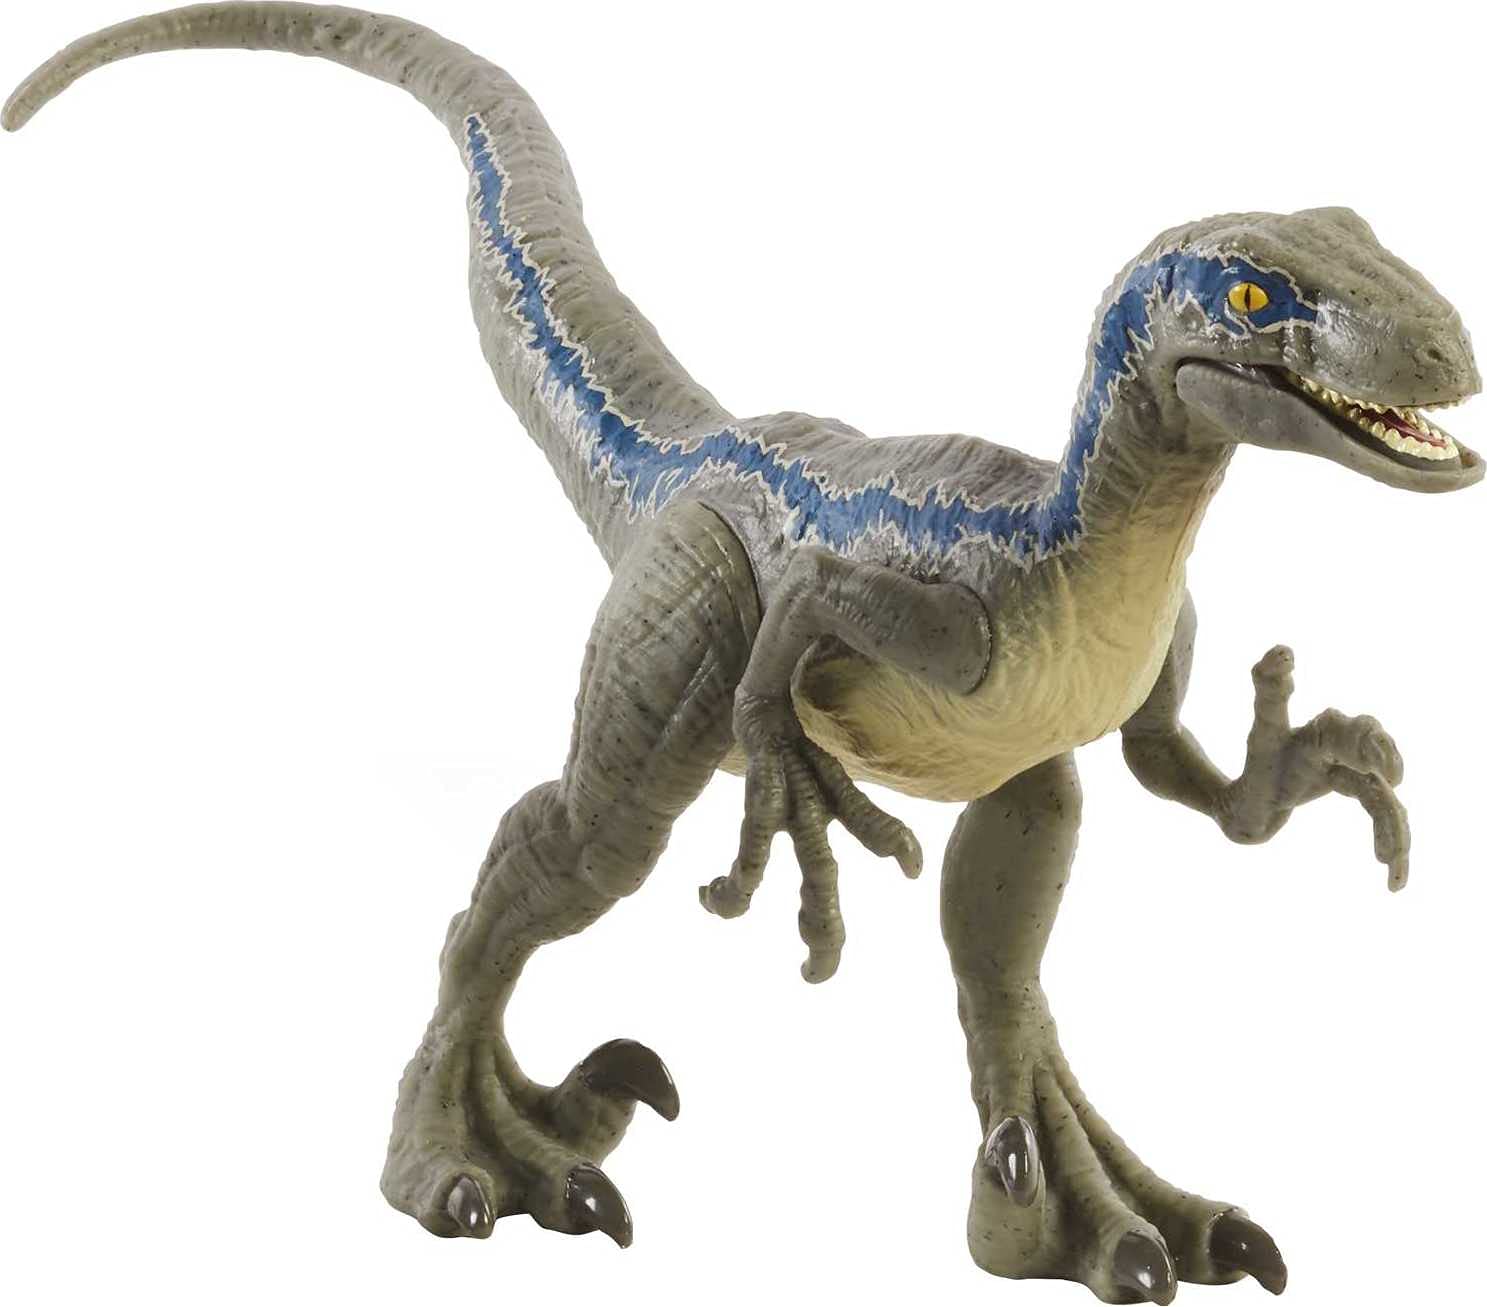 Jurassic World Darius Storypack with 3 Action Figures, Darius, Velociraptor Blue & Ankylosurus Bumpy, Camp Cretaceous Authentic Decoration & Movable Joints [Amazon Exclusive]